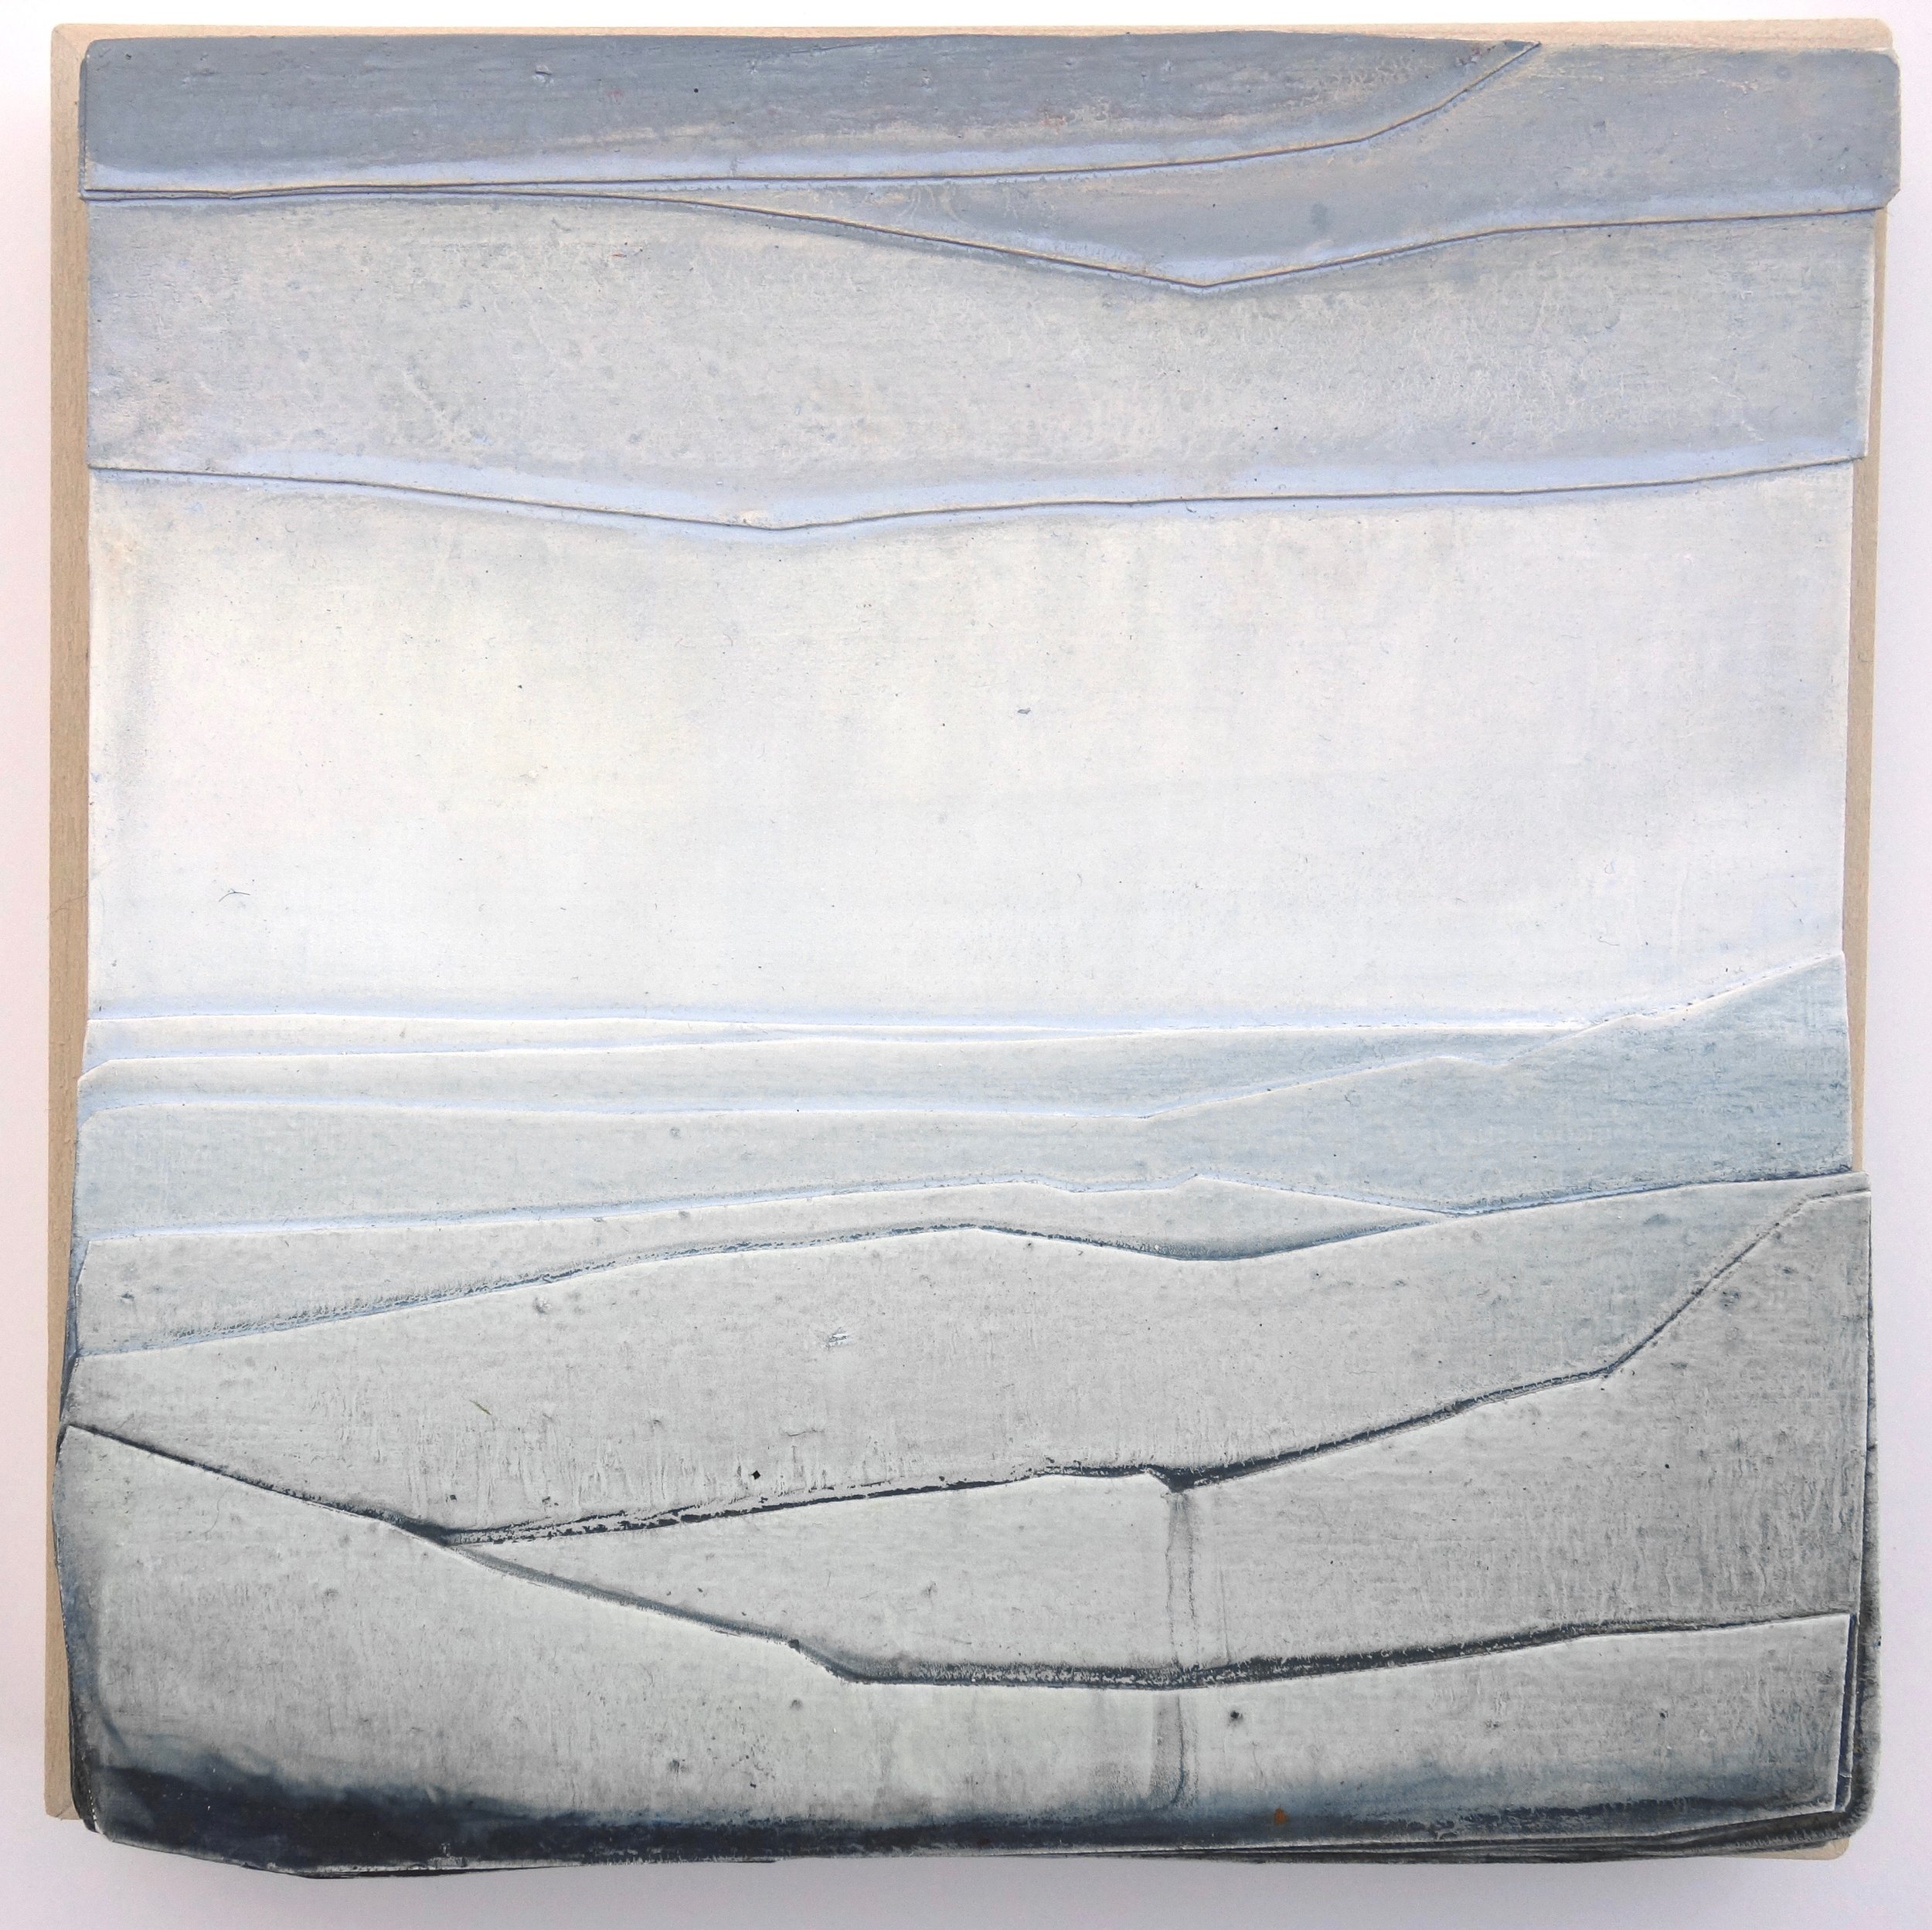   Lamina VI (downpour)   oil, paper, on panel  6.5 x 6.5”  2022     